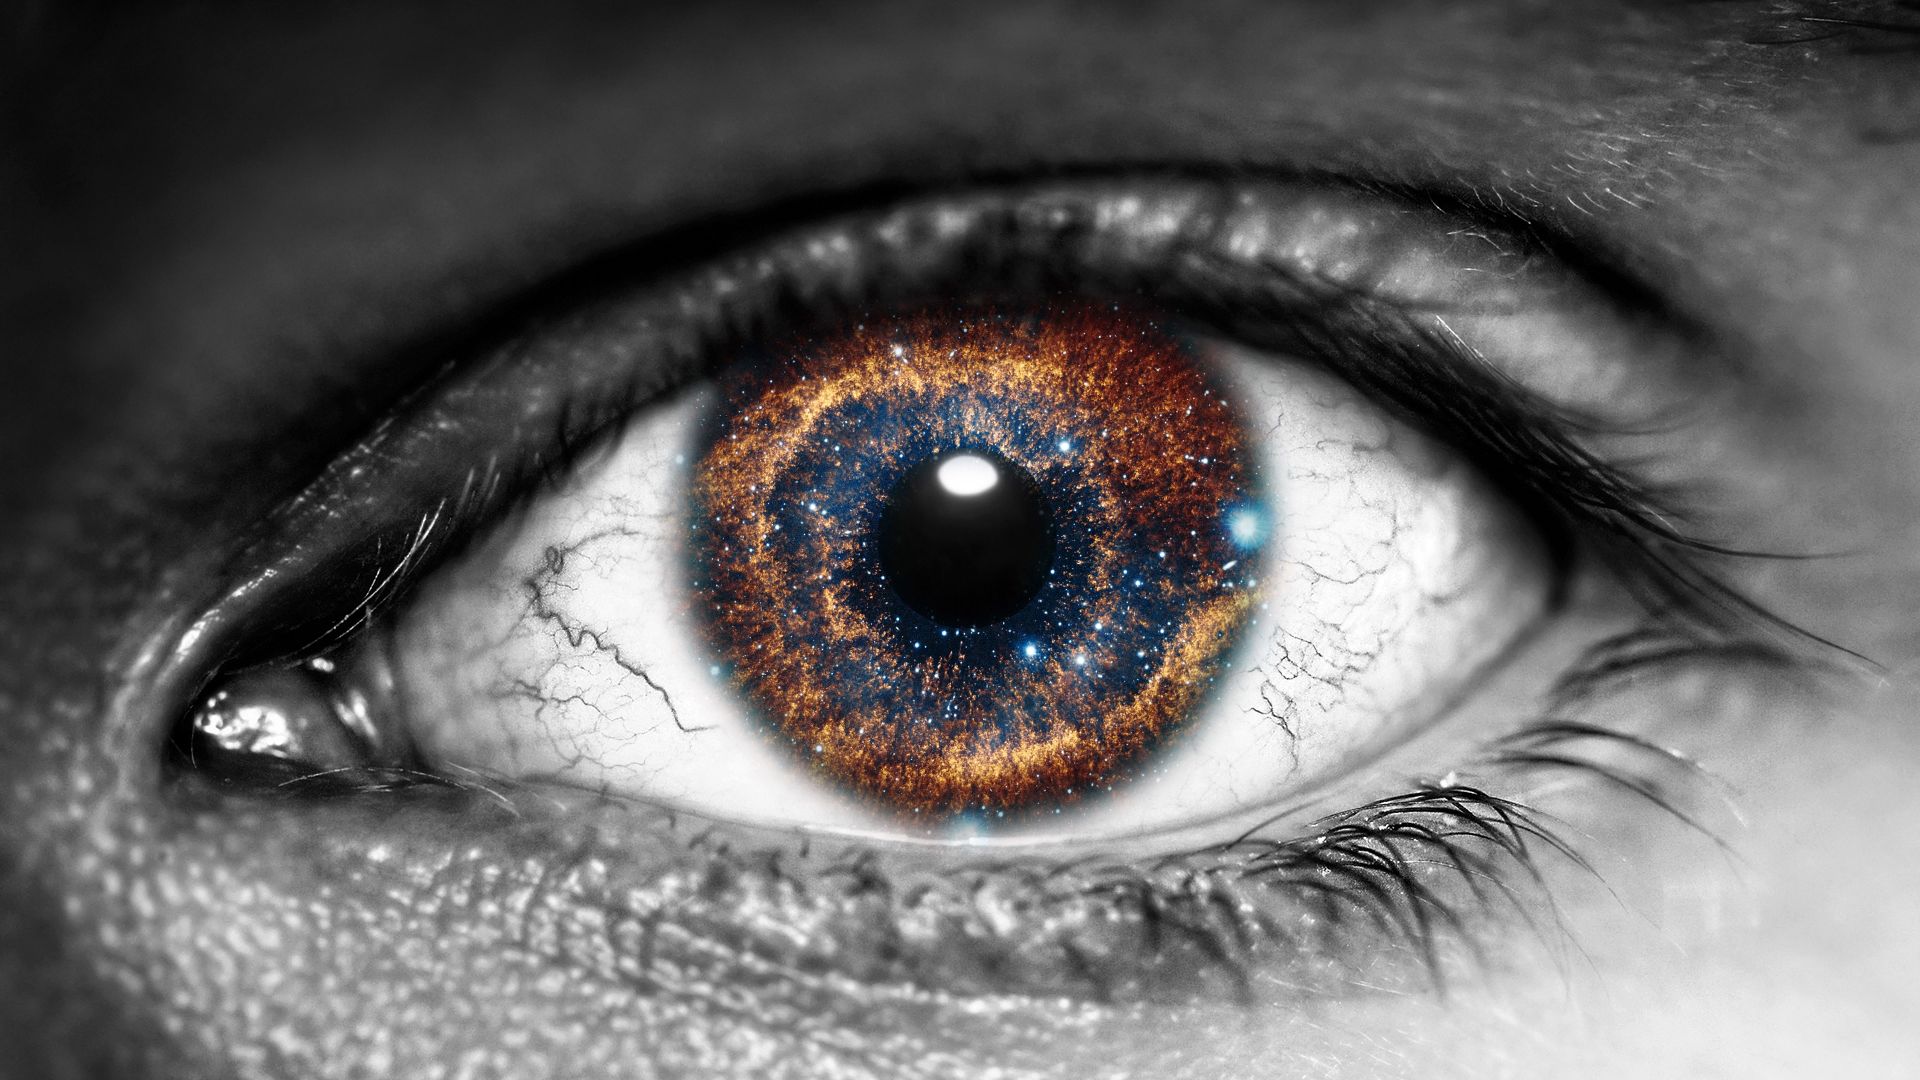 Wallpaper Galaxy, inside eye, close up